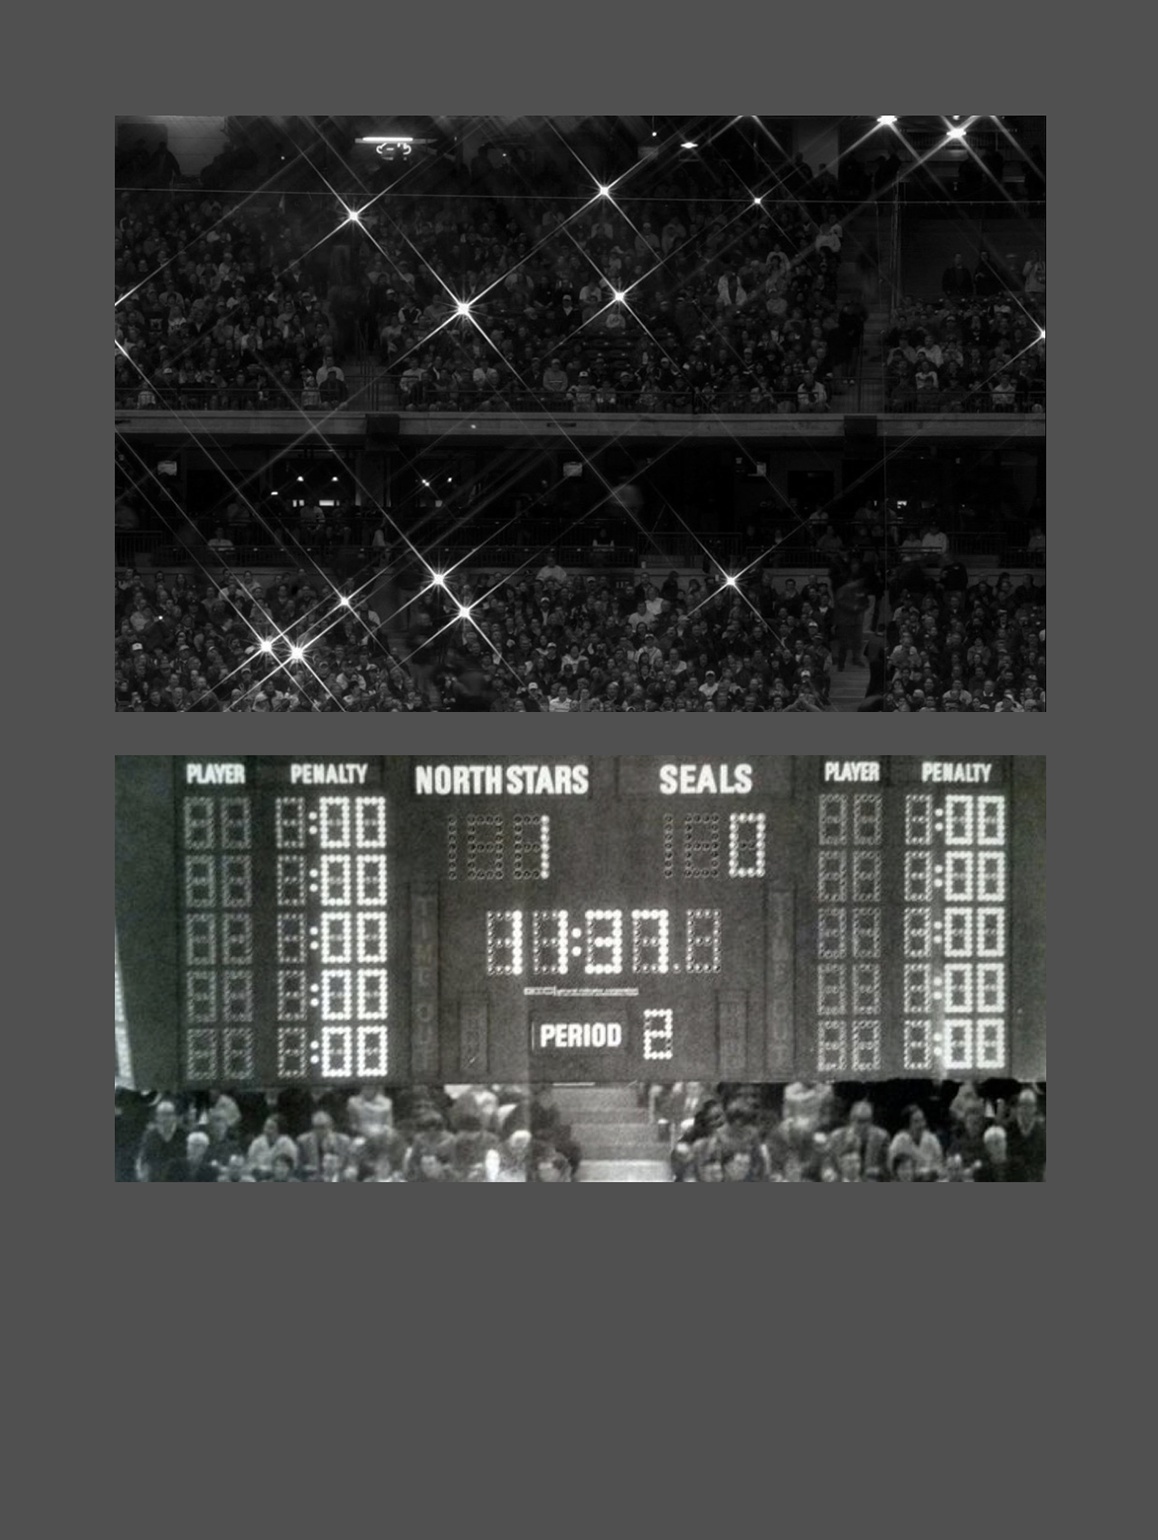 Moodboard of sports crowd and giant scoreboard